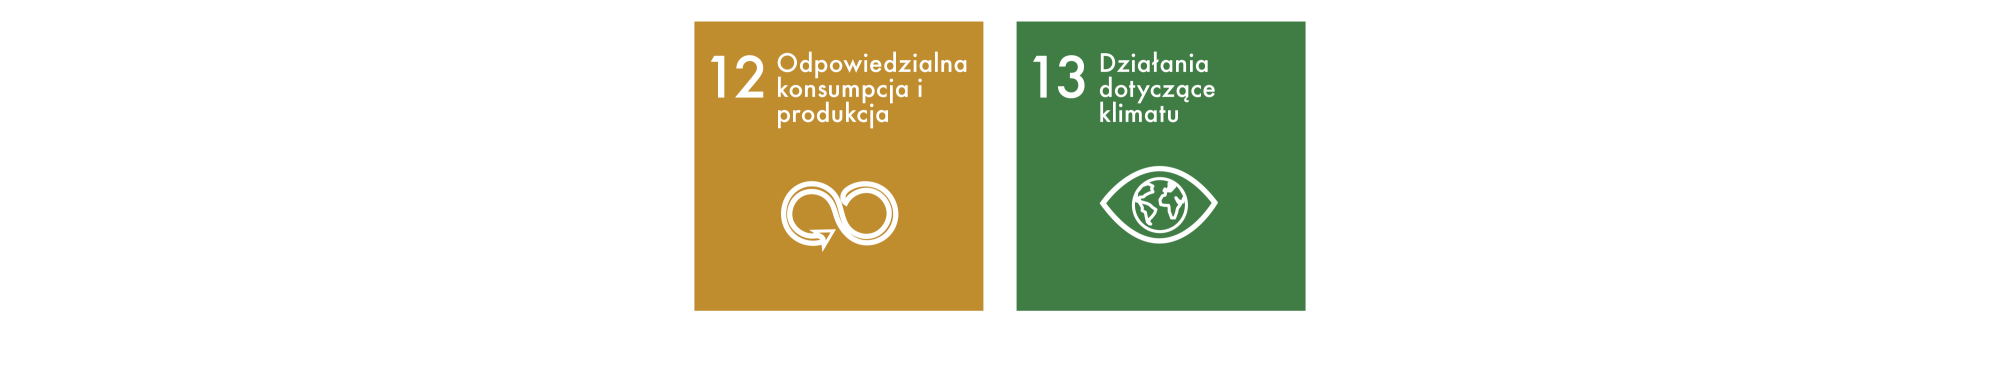 Sustainable Development Goals 12-13 PL